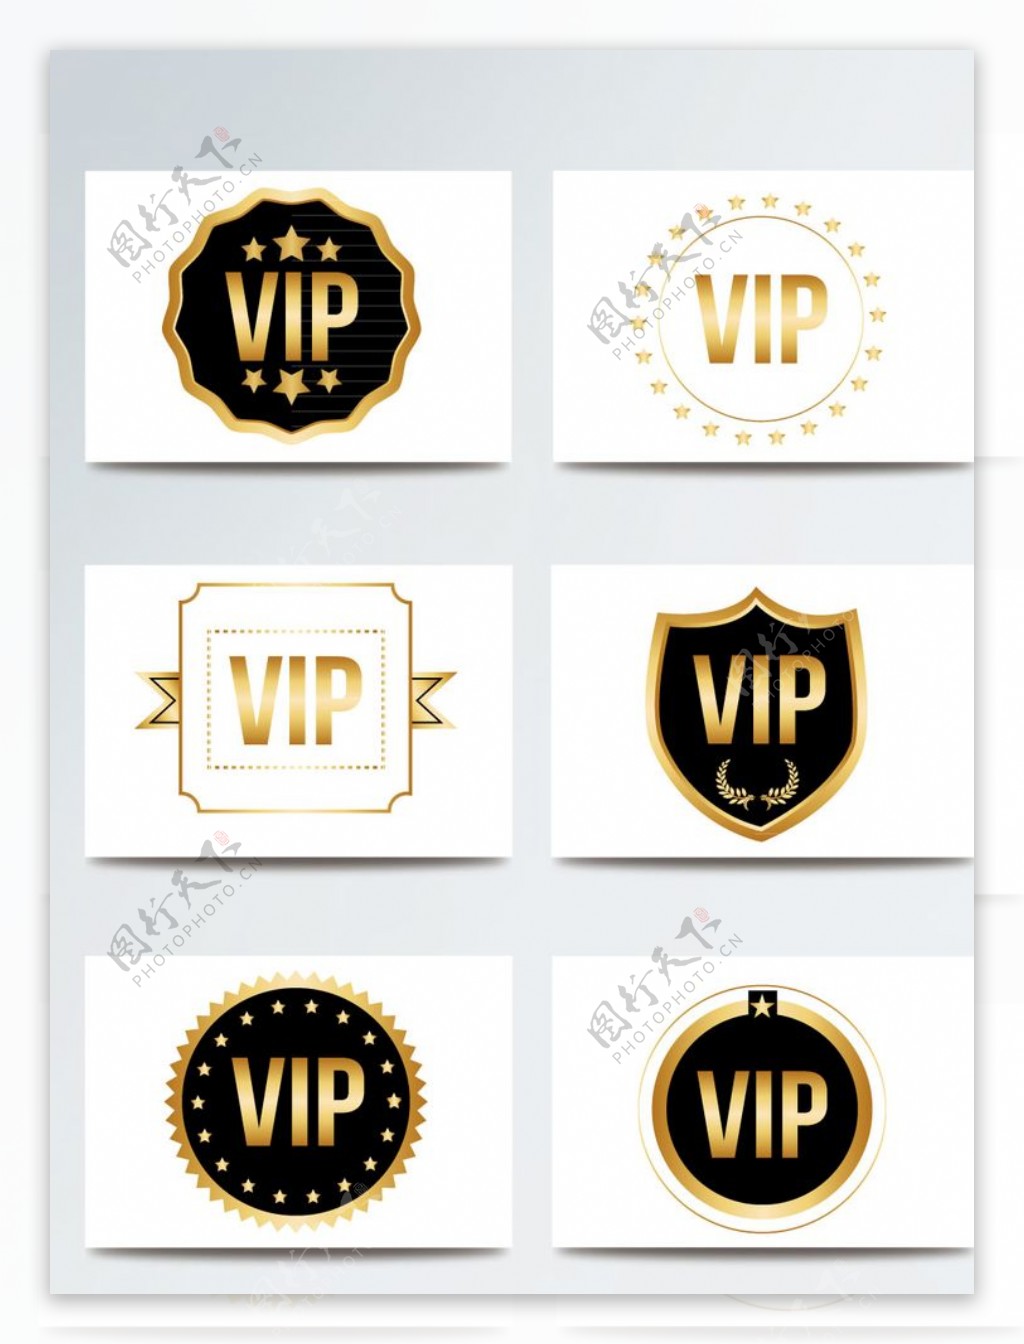 VIP徽章